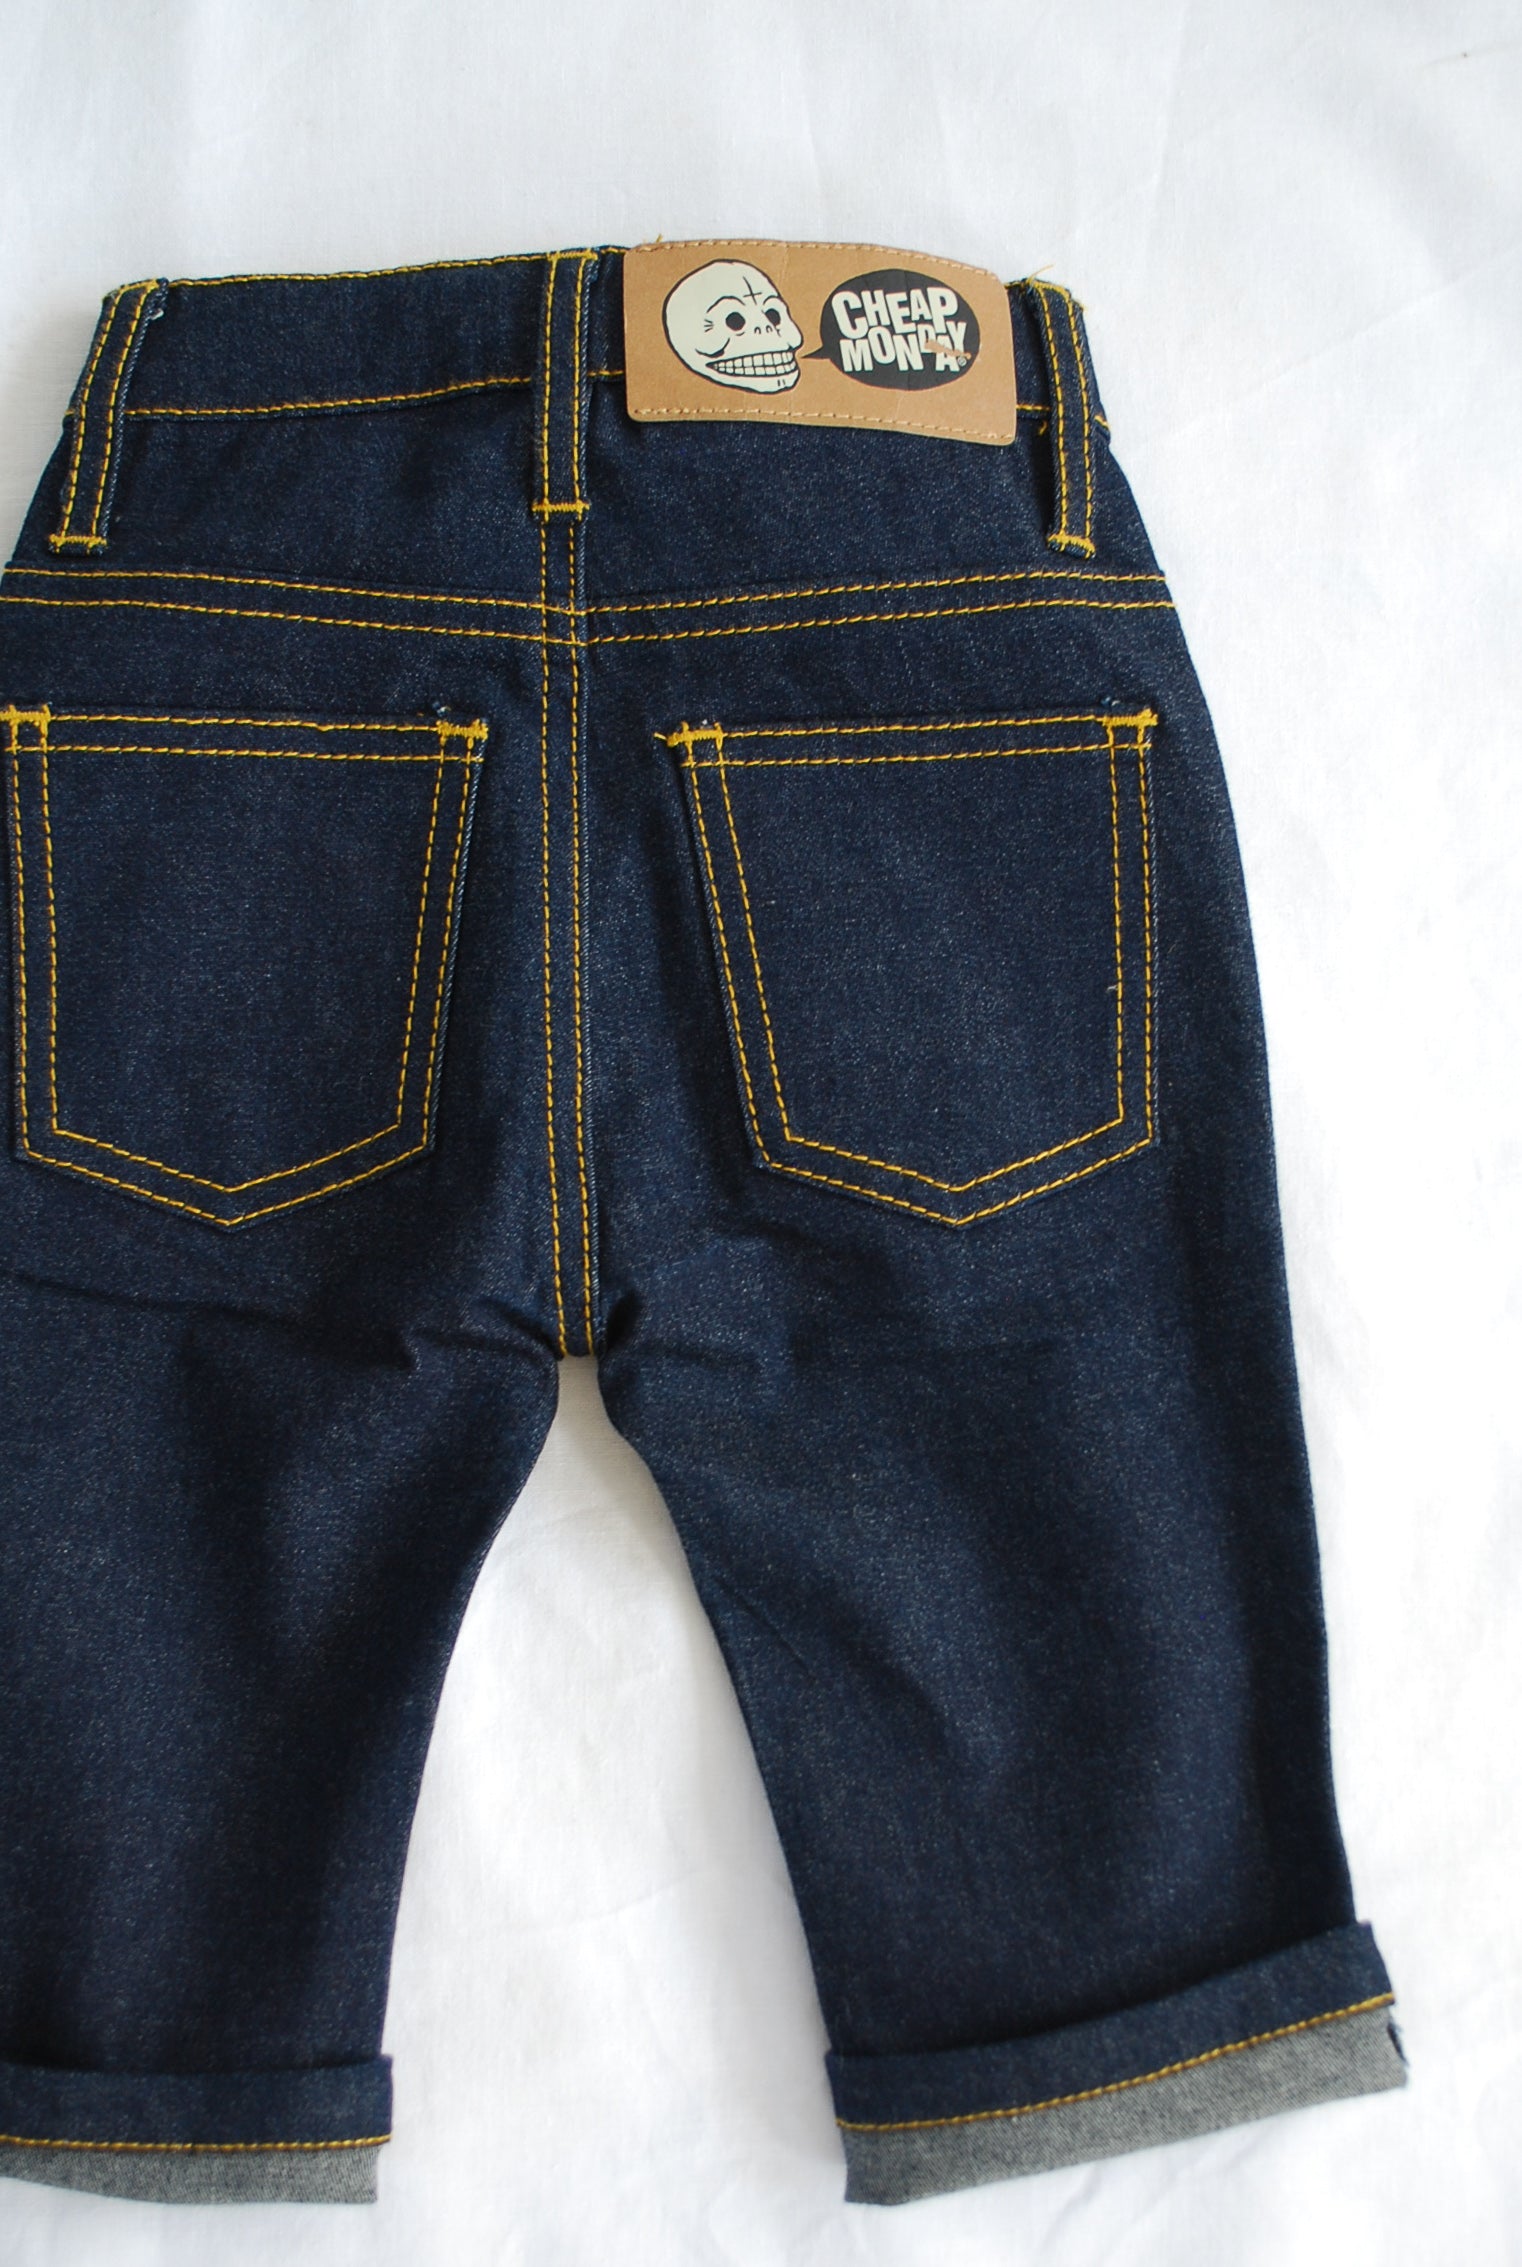 Waakzaamheid volgorde zak Cheap Monday jeans mt 1Y – Studio Cornetto